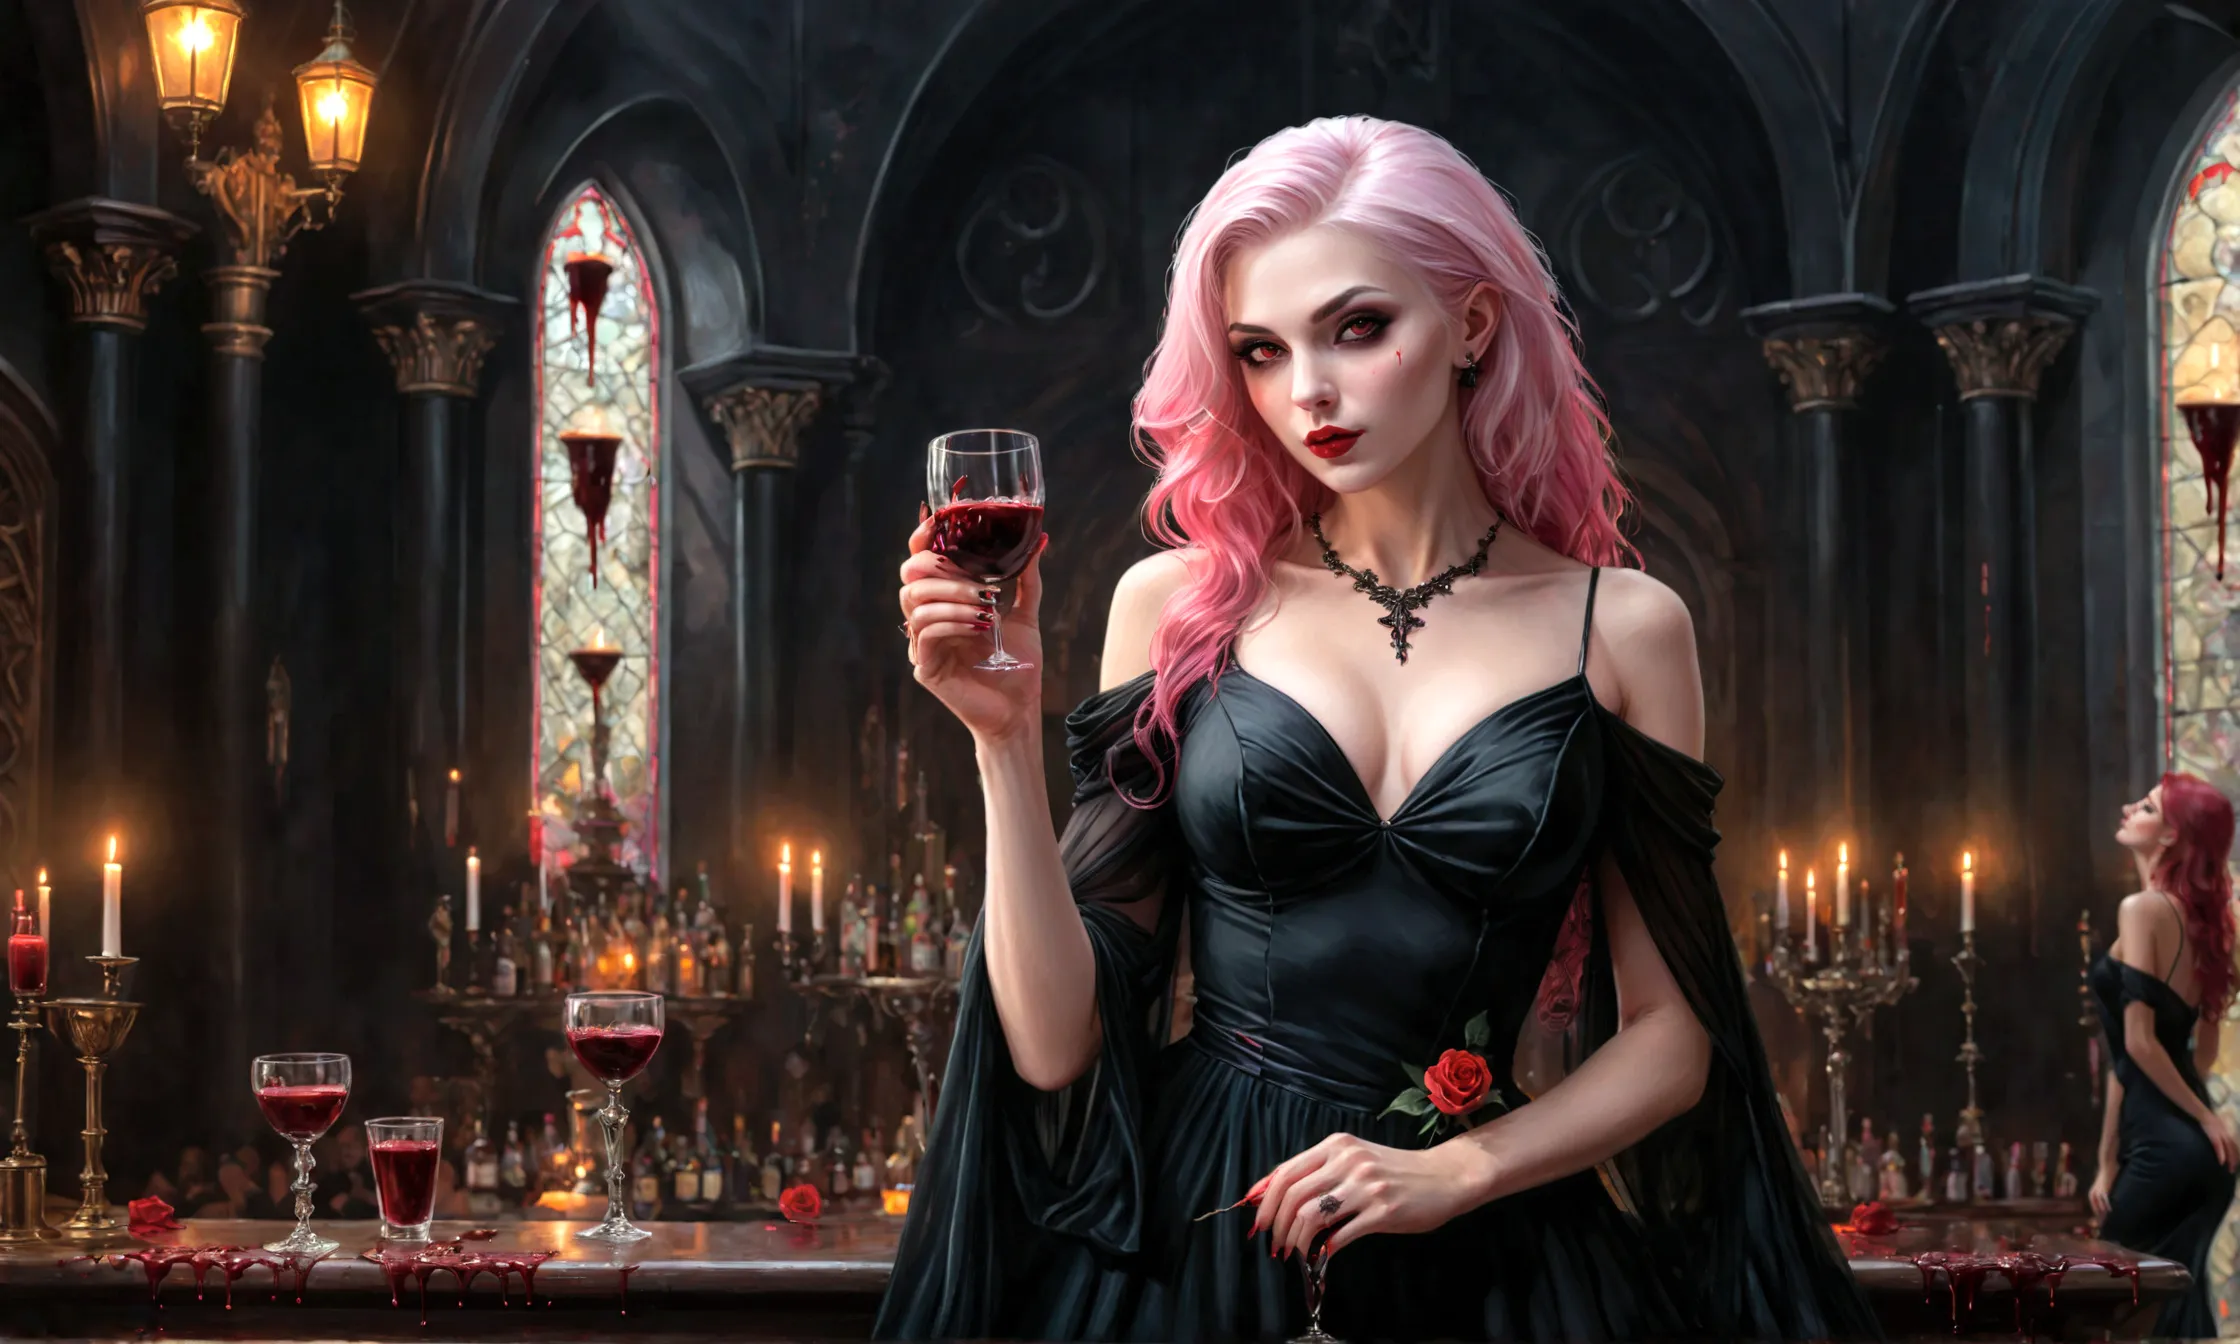 Arafed, dark fantasy art, glamour shot, award winning shot, photorealistic, a portrait of a female vampire drinking a ((glass of...